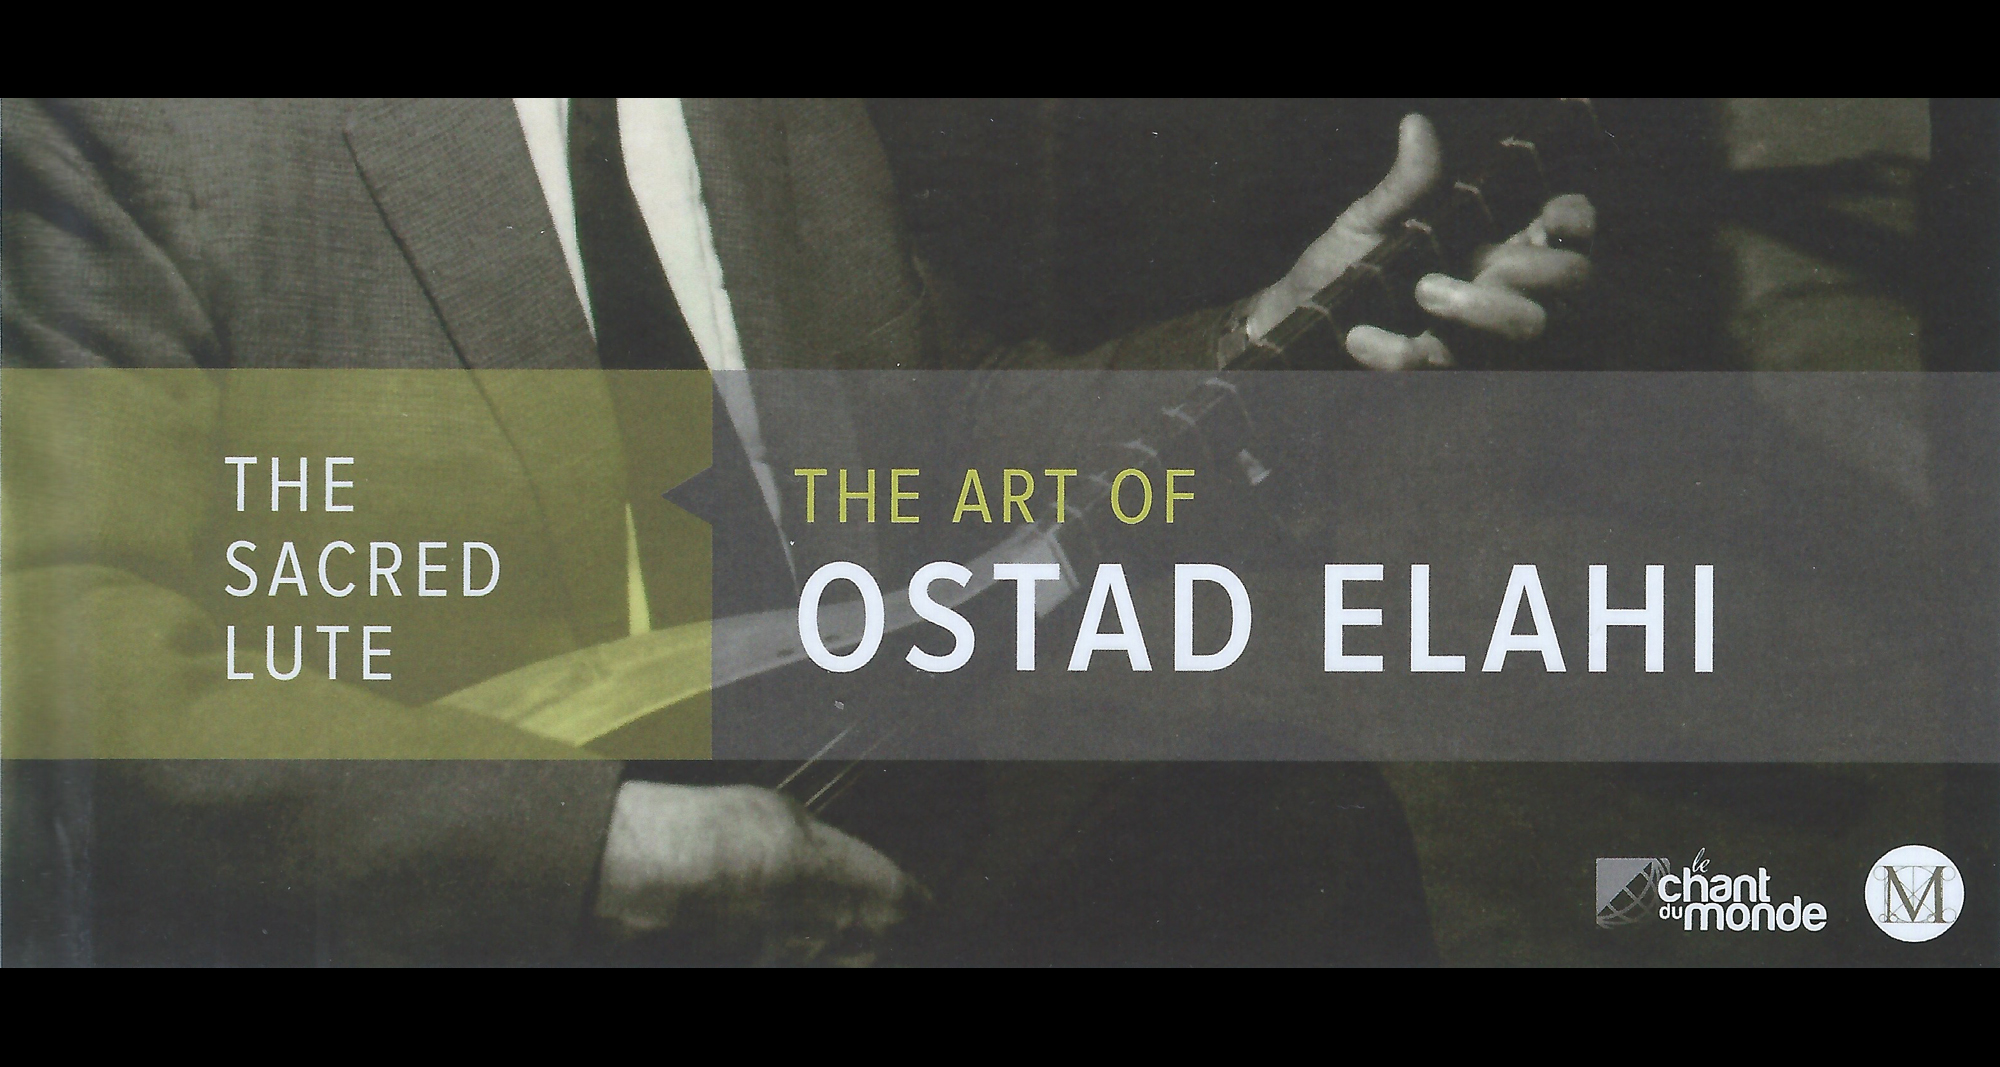 Ostad Elahi, The Sacred Lute - detail of the cover